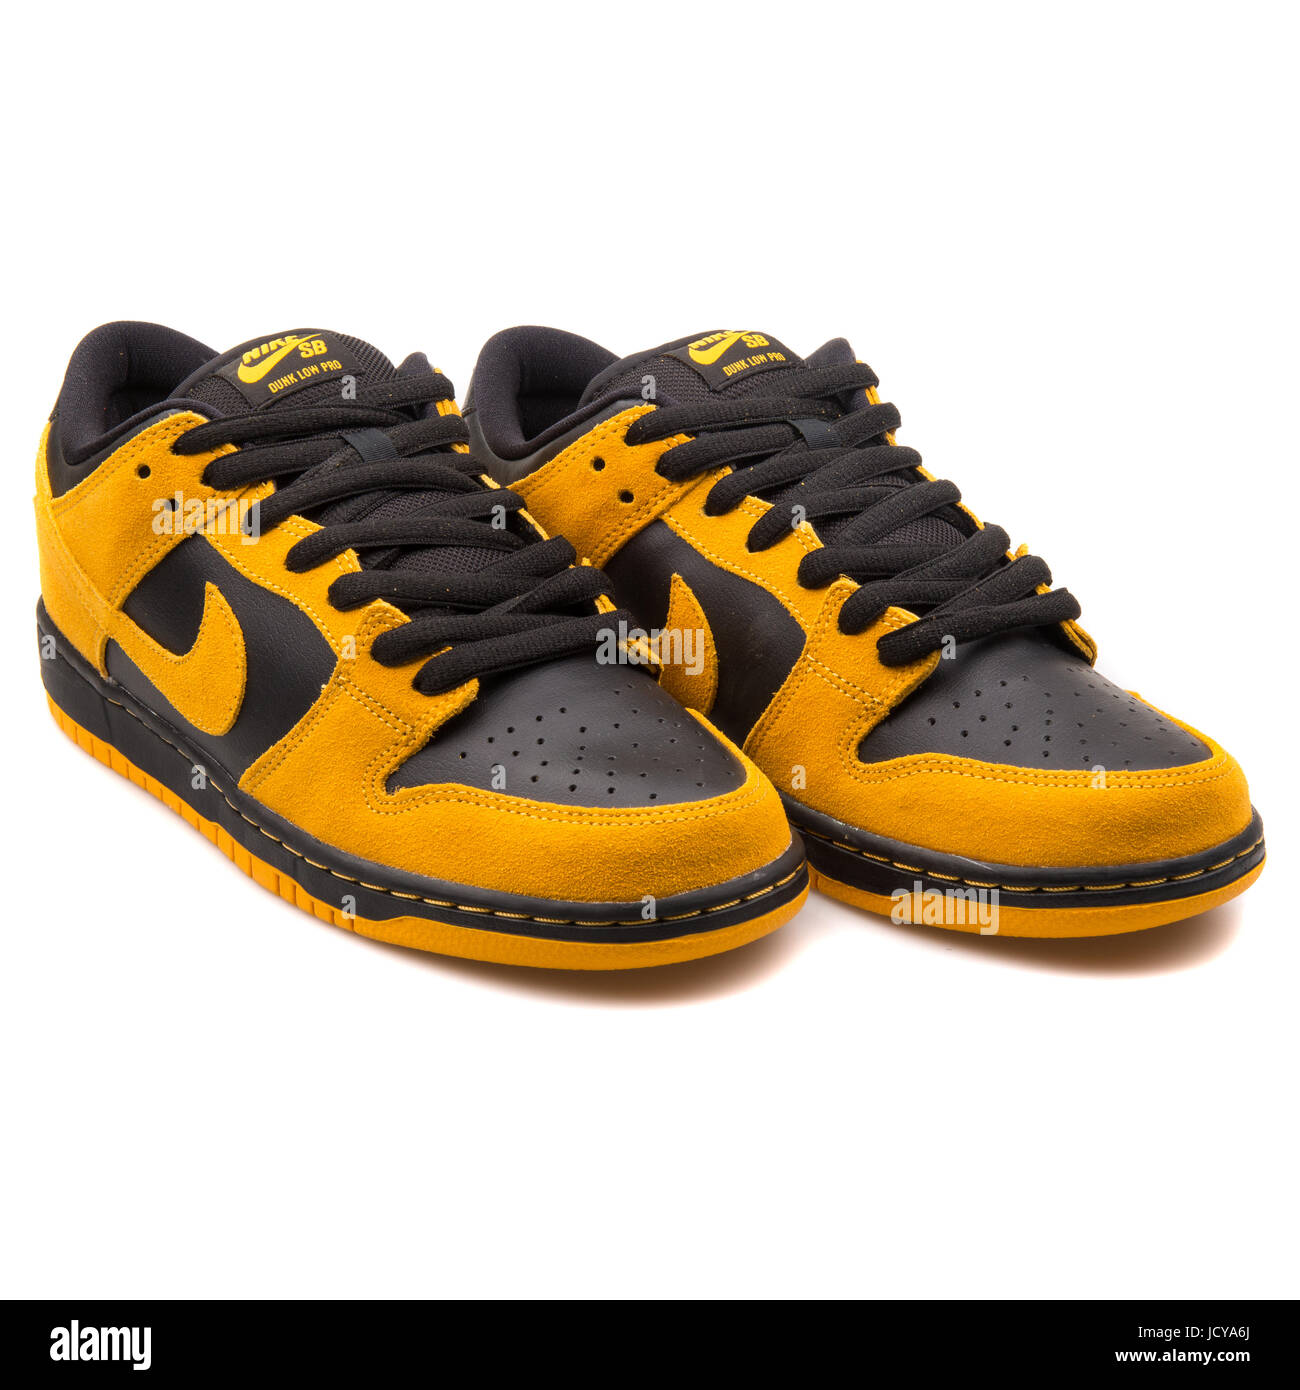 Nike Dunk Low Pro SB Gold Yellow and Black Men's Skateboarding